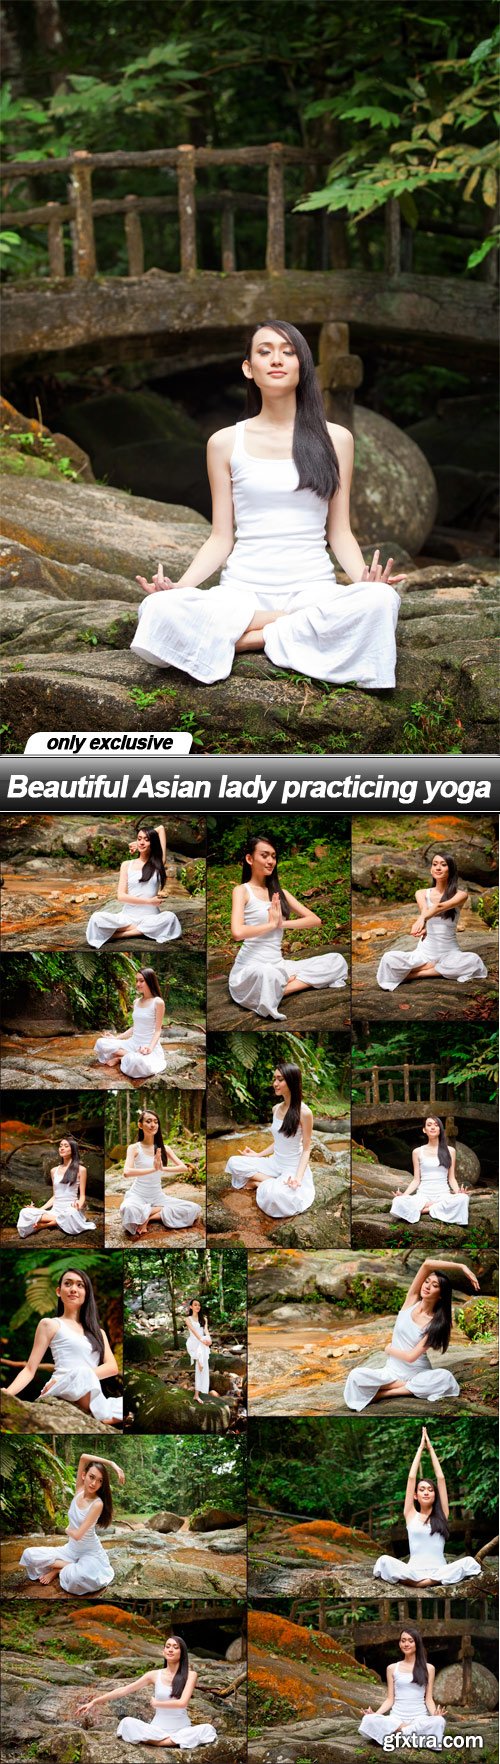 Beautiful Asian lady practicing yoga - 15 UHQ JPEG